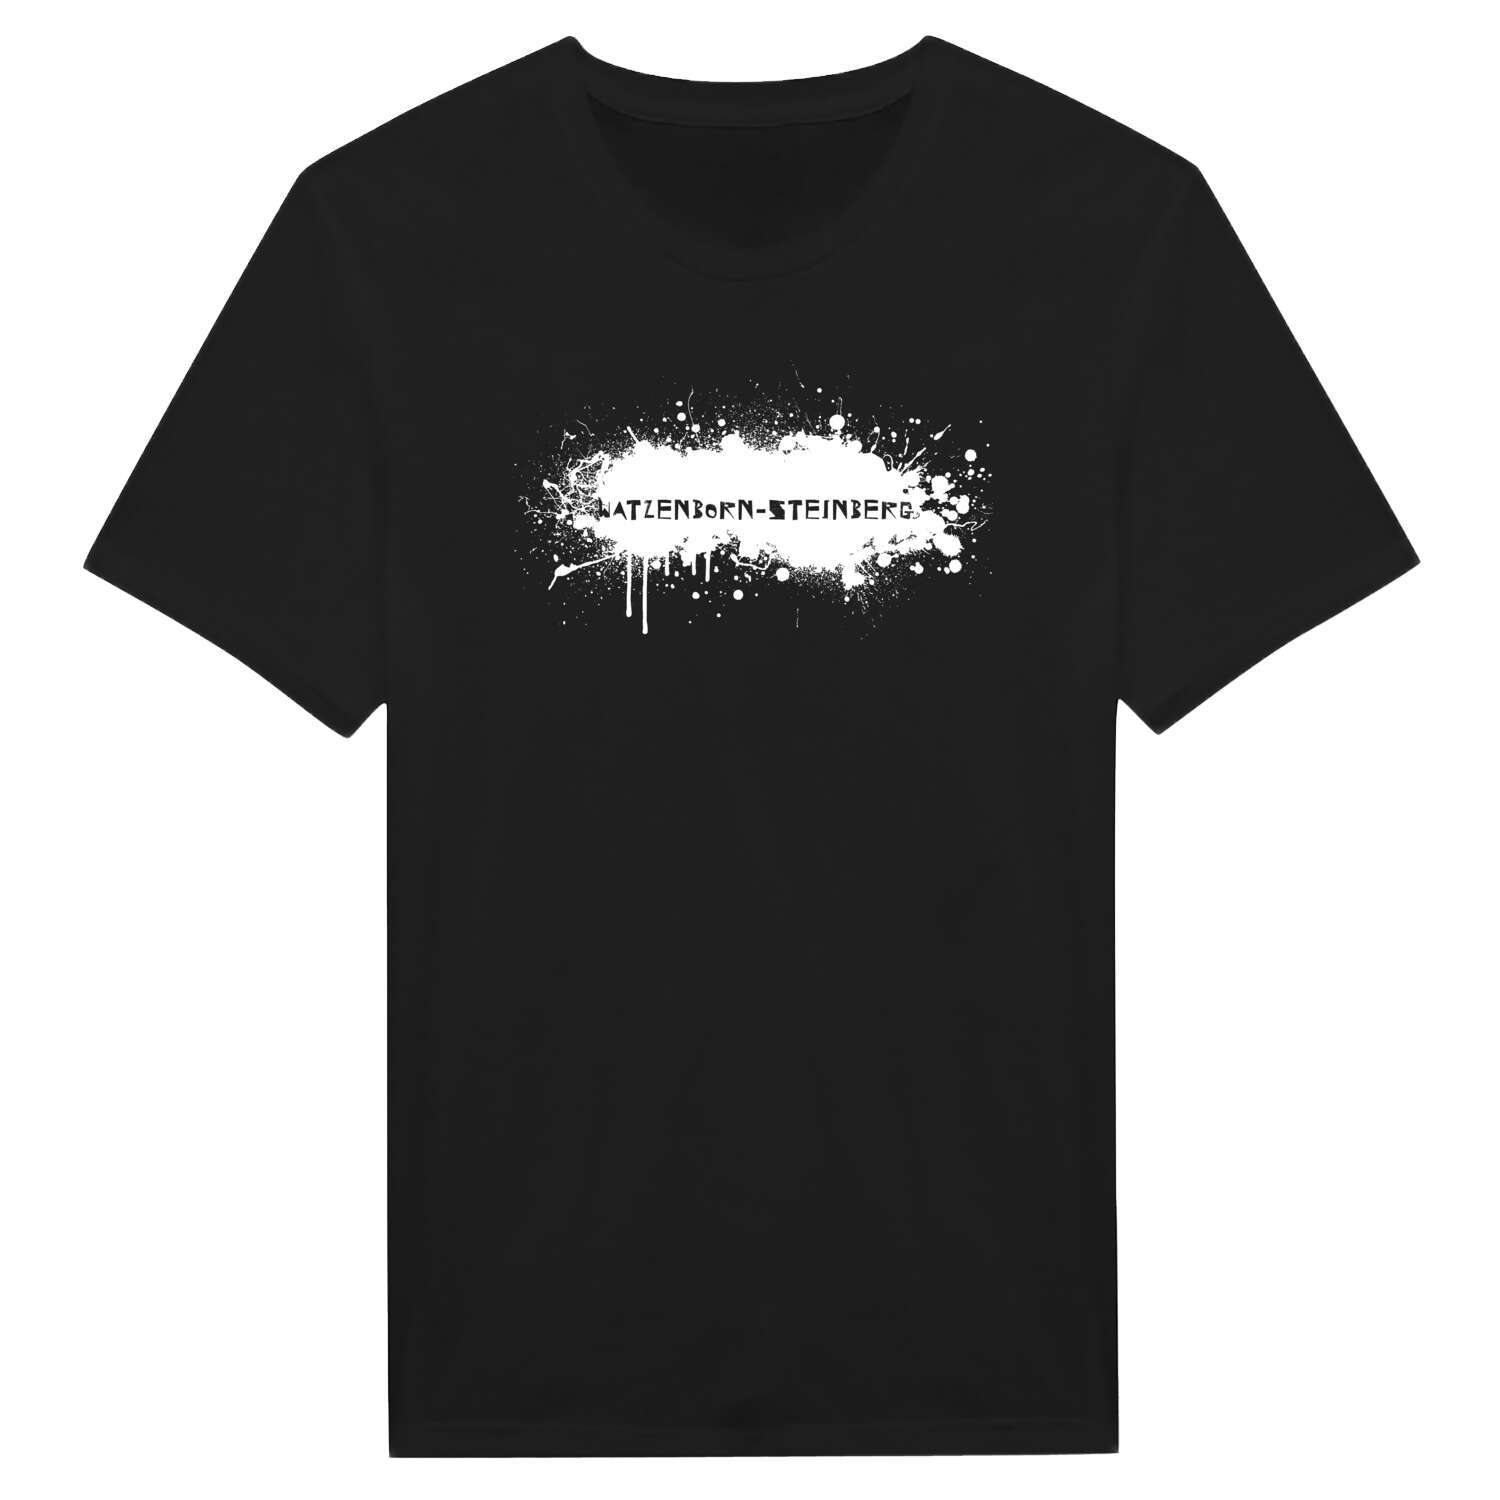 Watzenborn-Steinberg T-Shirt »Paint Splash Punk«